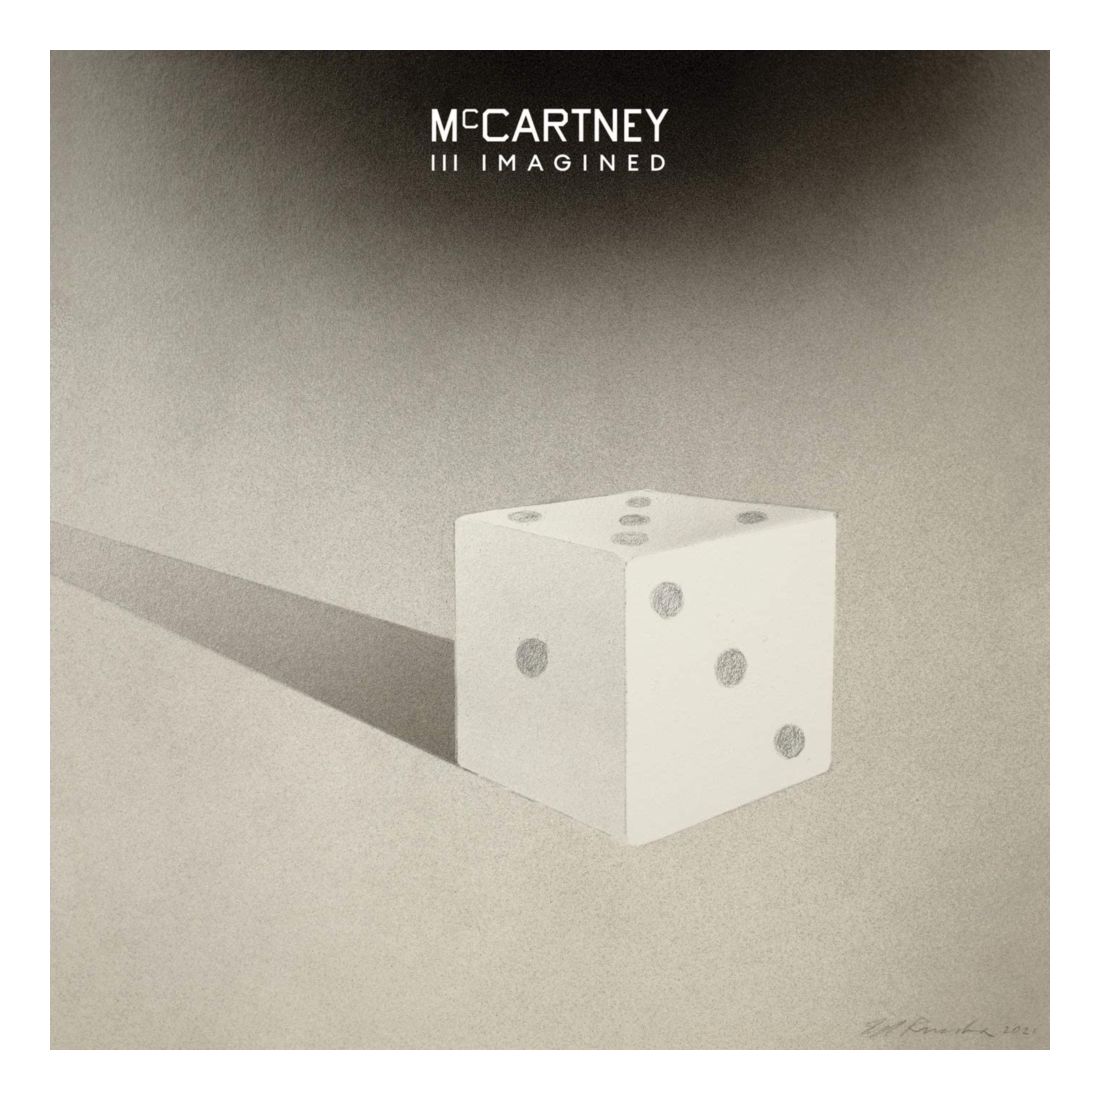 CD диск Mccartney III Imagined (2 Discs) | Paul Mccartney mccartney paul iii imagined 2lp конверты внутренние coex для грампластинок 12 25шт набор